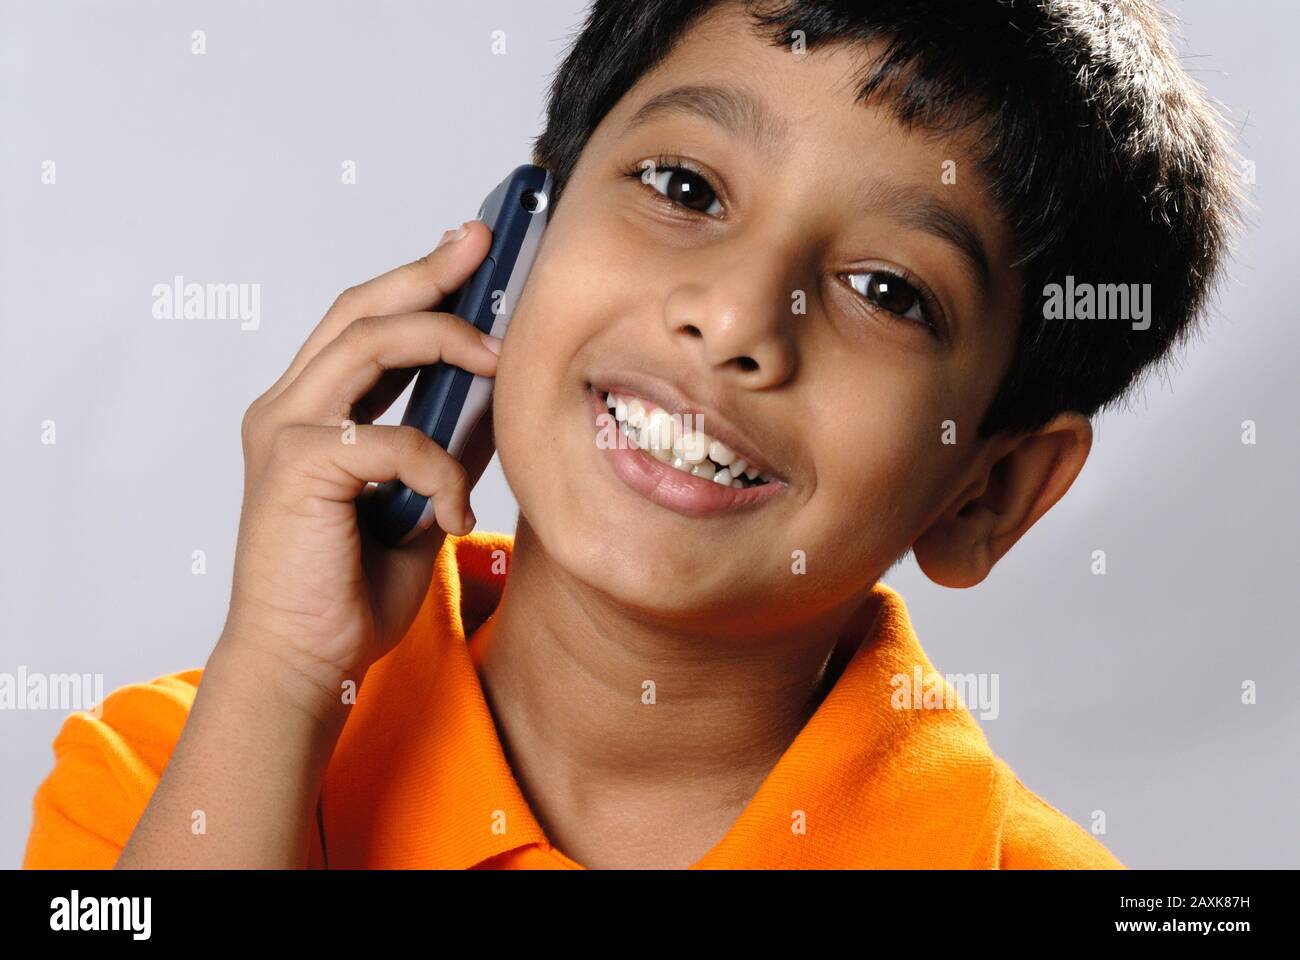 Mumbai, Maharashtra, India- Asia, Supt. 30, 2006 - Indian little cute naughty boy funny expression talking on mobile phone Stock Photo